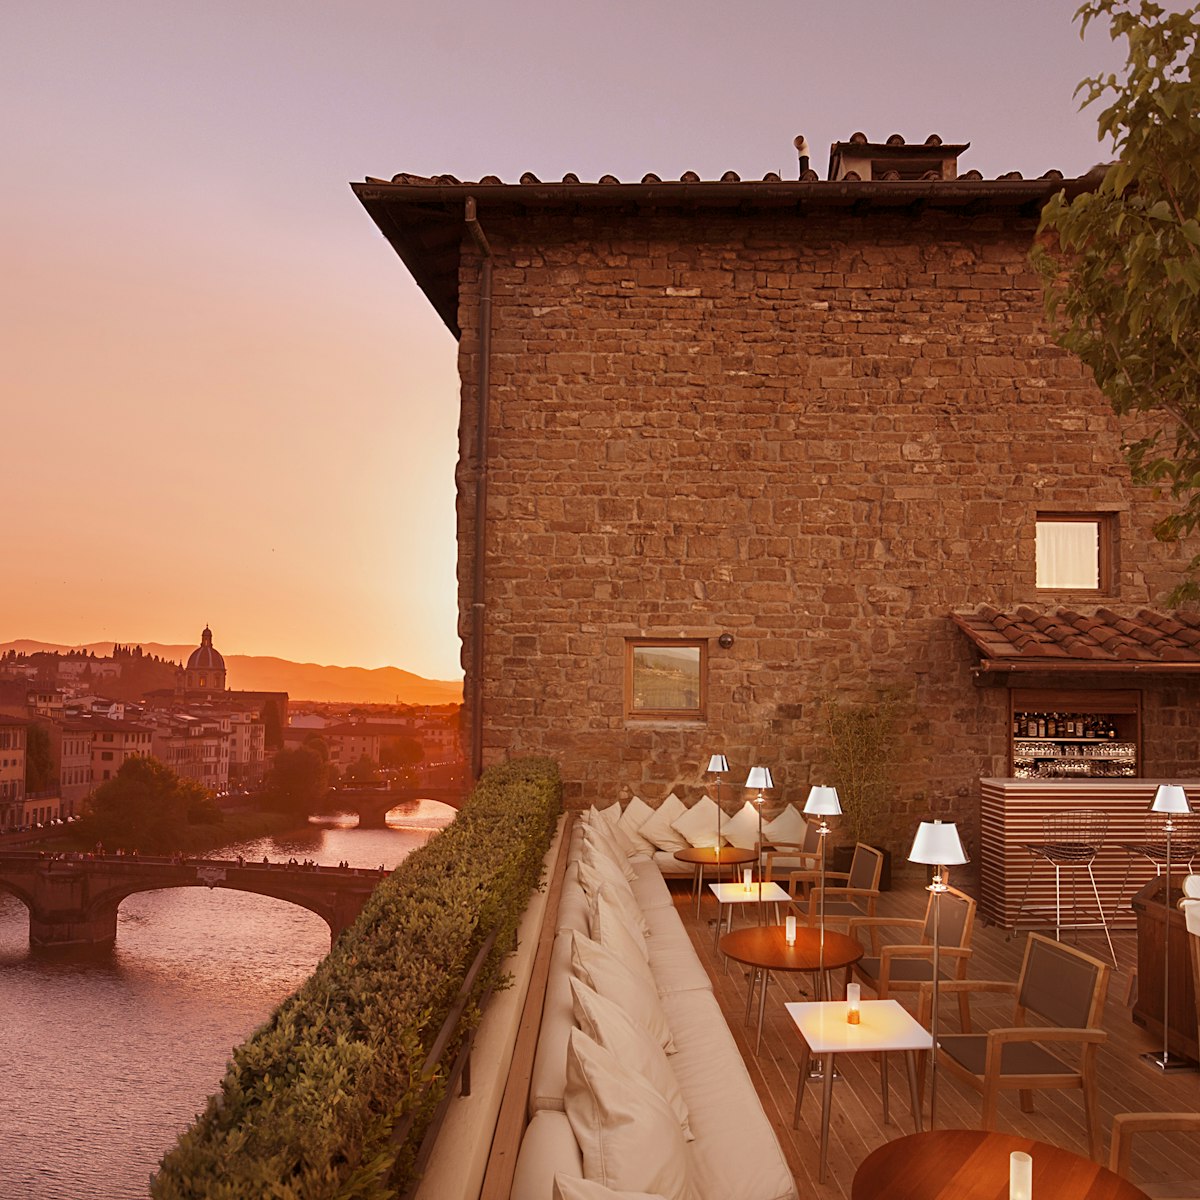 La Terrazza Lounge Bar in Florence